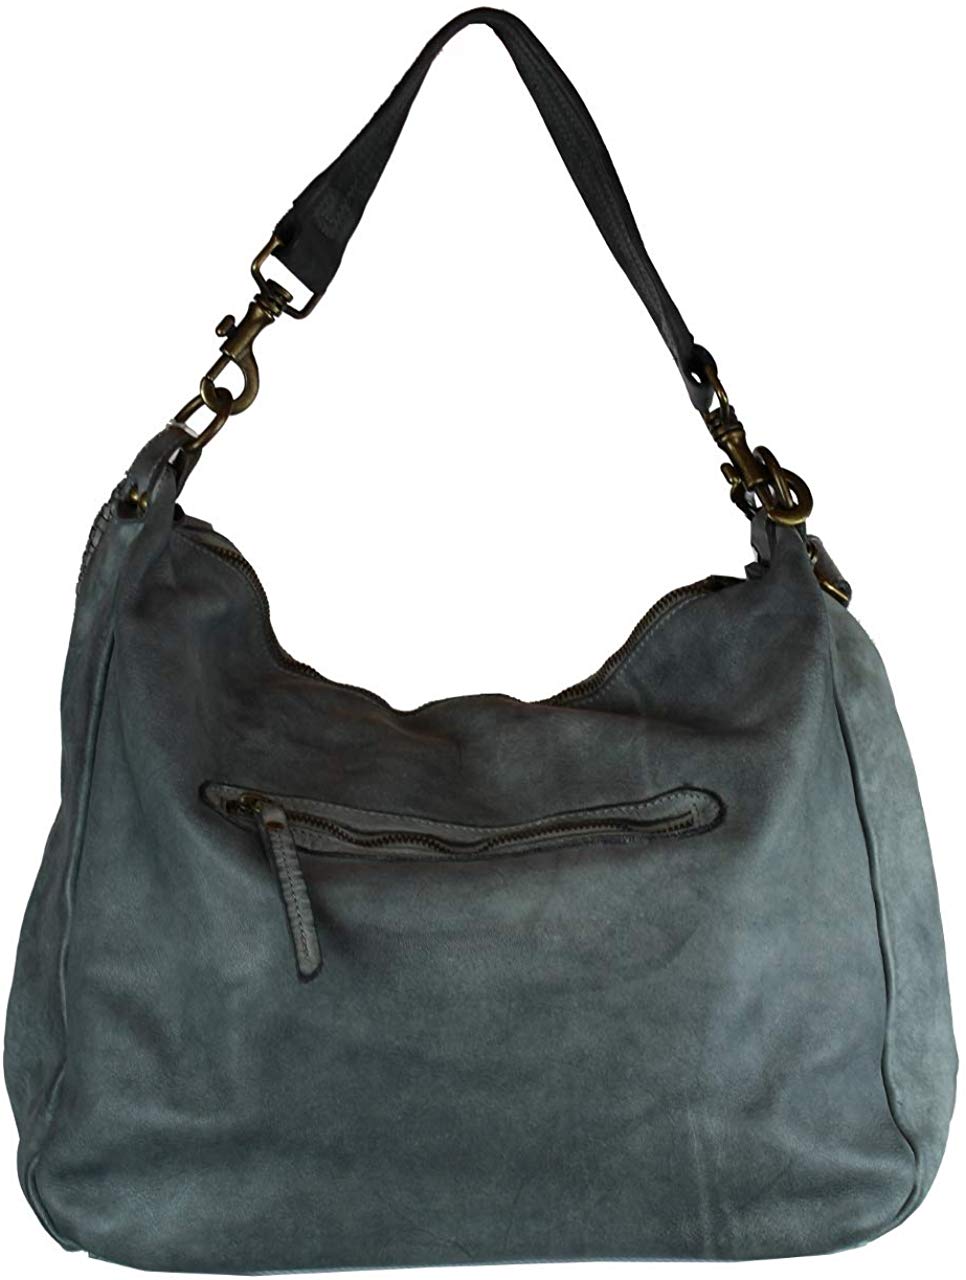 BZNA Bag Emilia blau Italy Designer Damen Handtasche Schultertasche Tasche Leder Shopper Neu